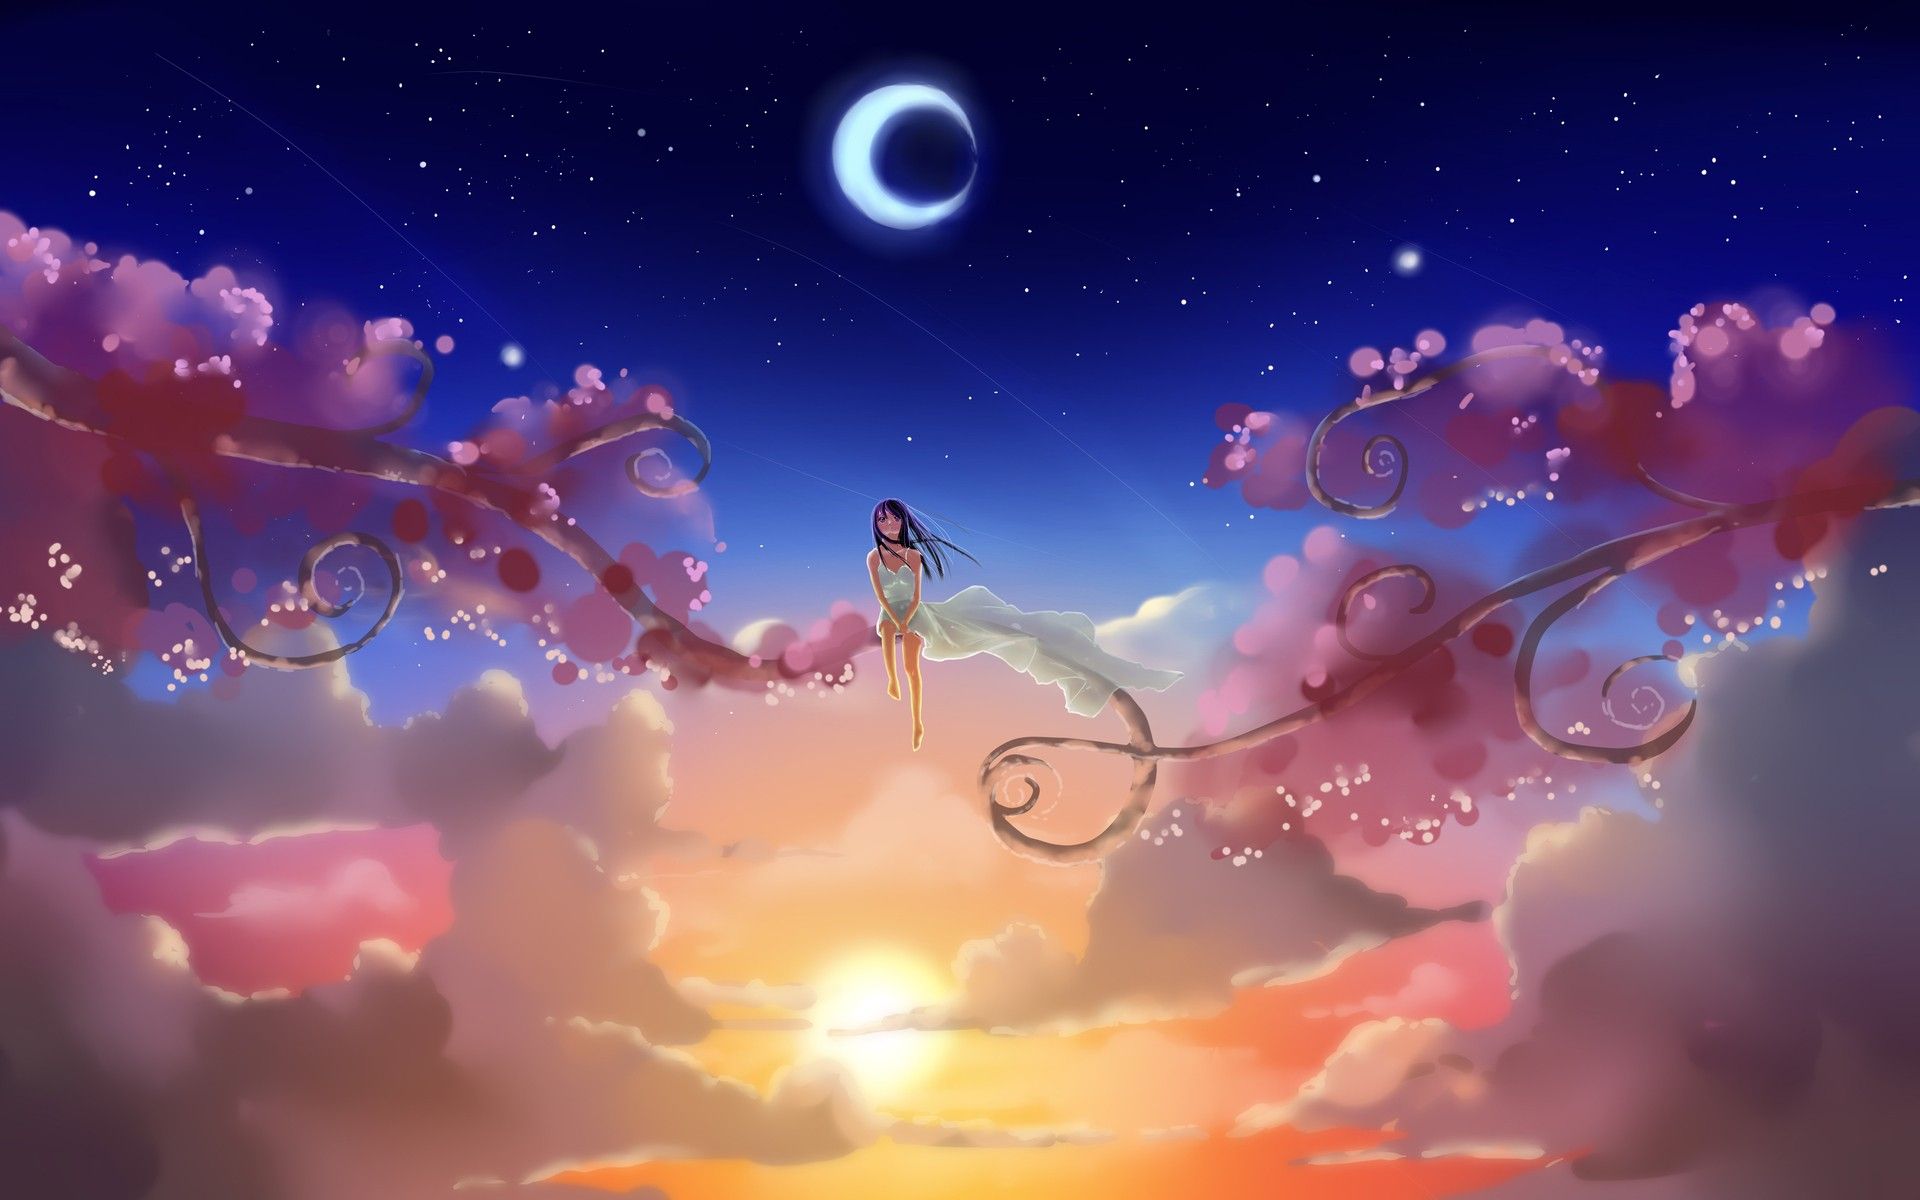 Sleeping with your Jade Egg. Anime wallpaper, Art wallpaper, Anime background